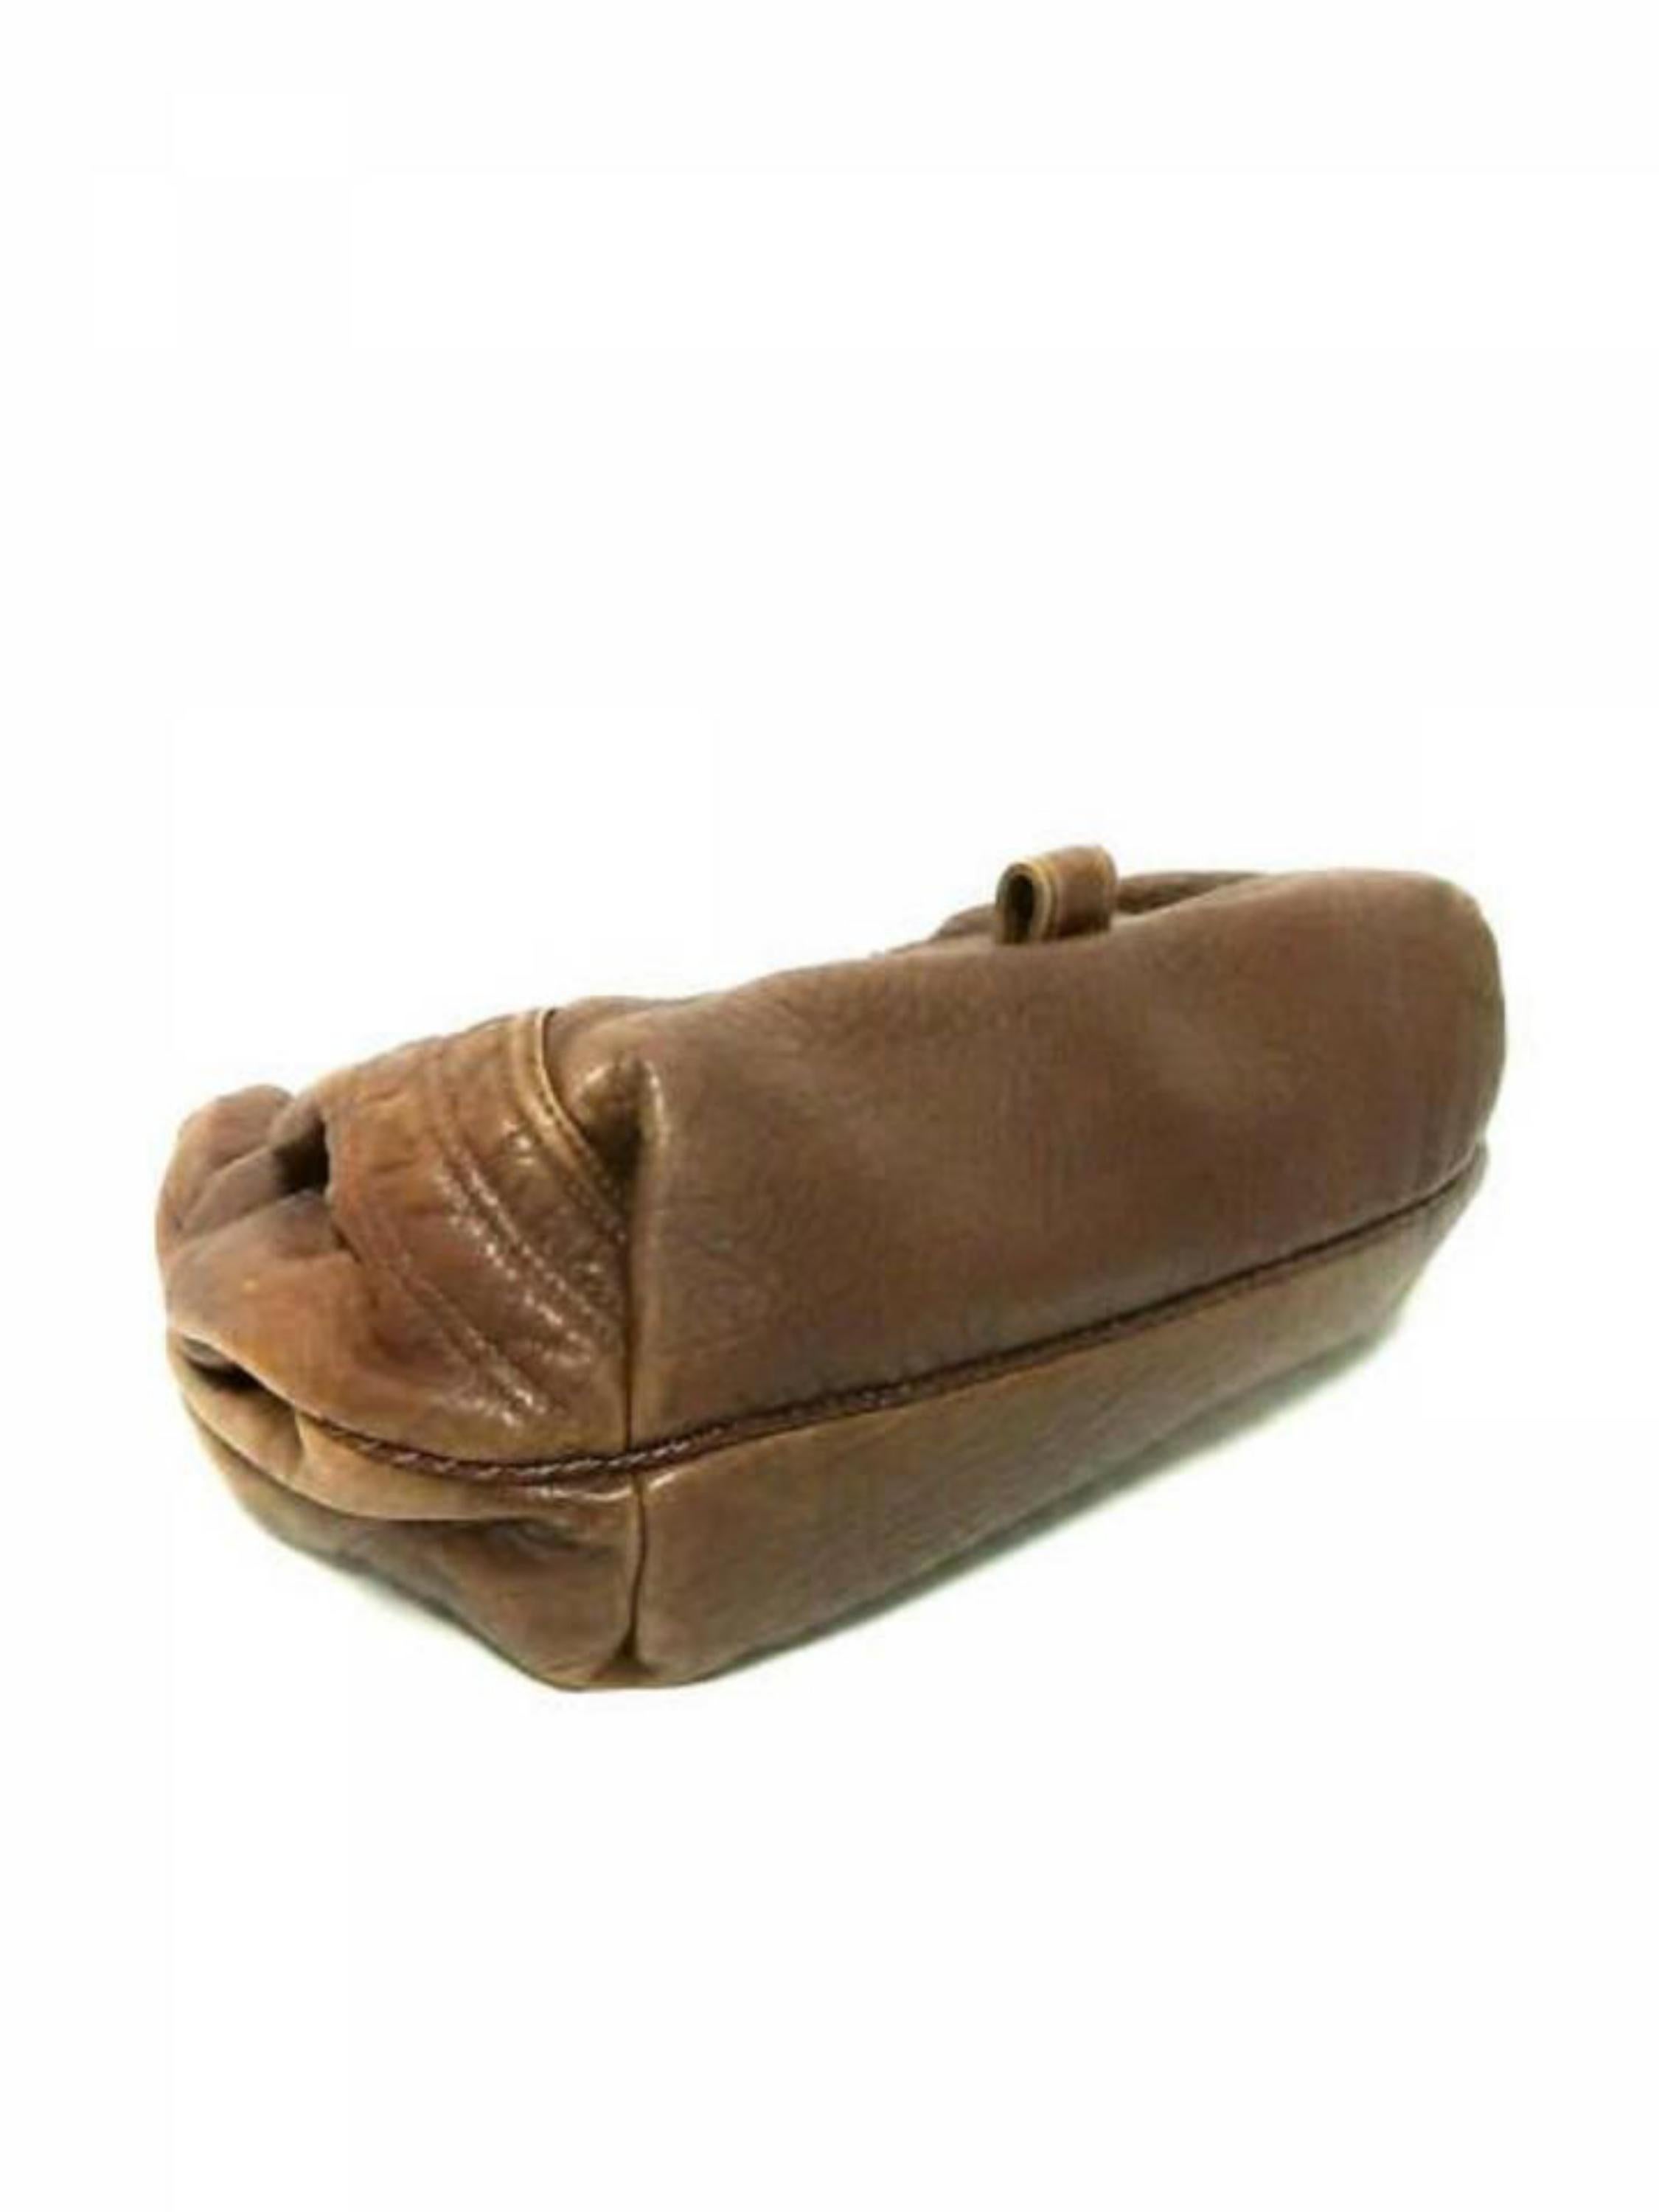 Fendi Large Spy 228040 Brown Leather Hobo Bag For Sale 2